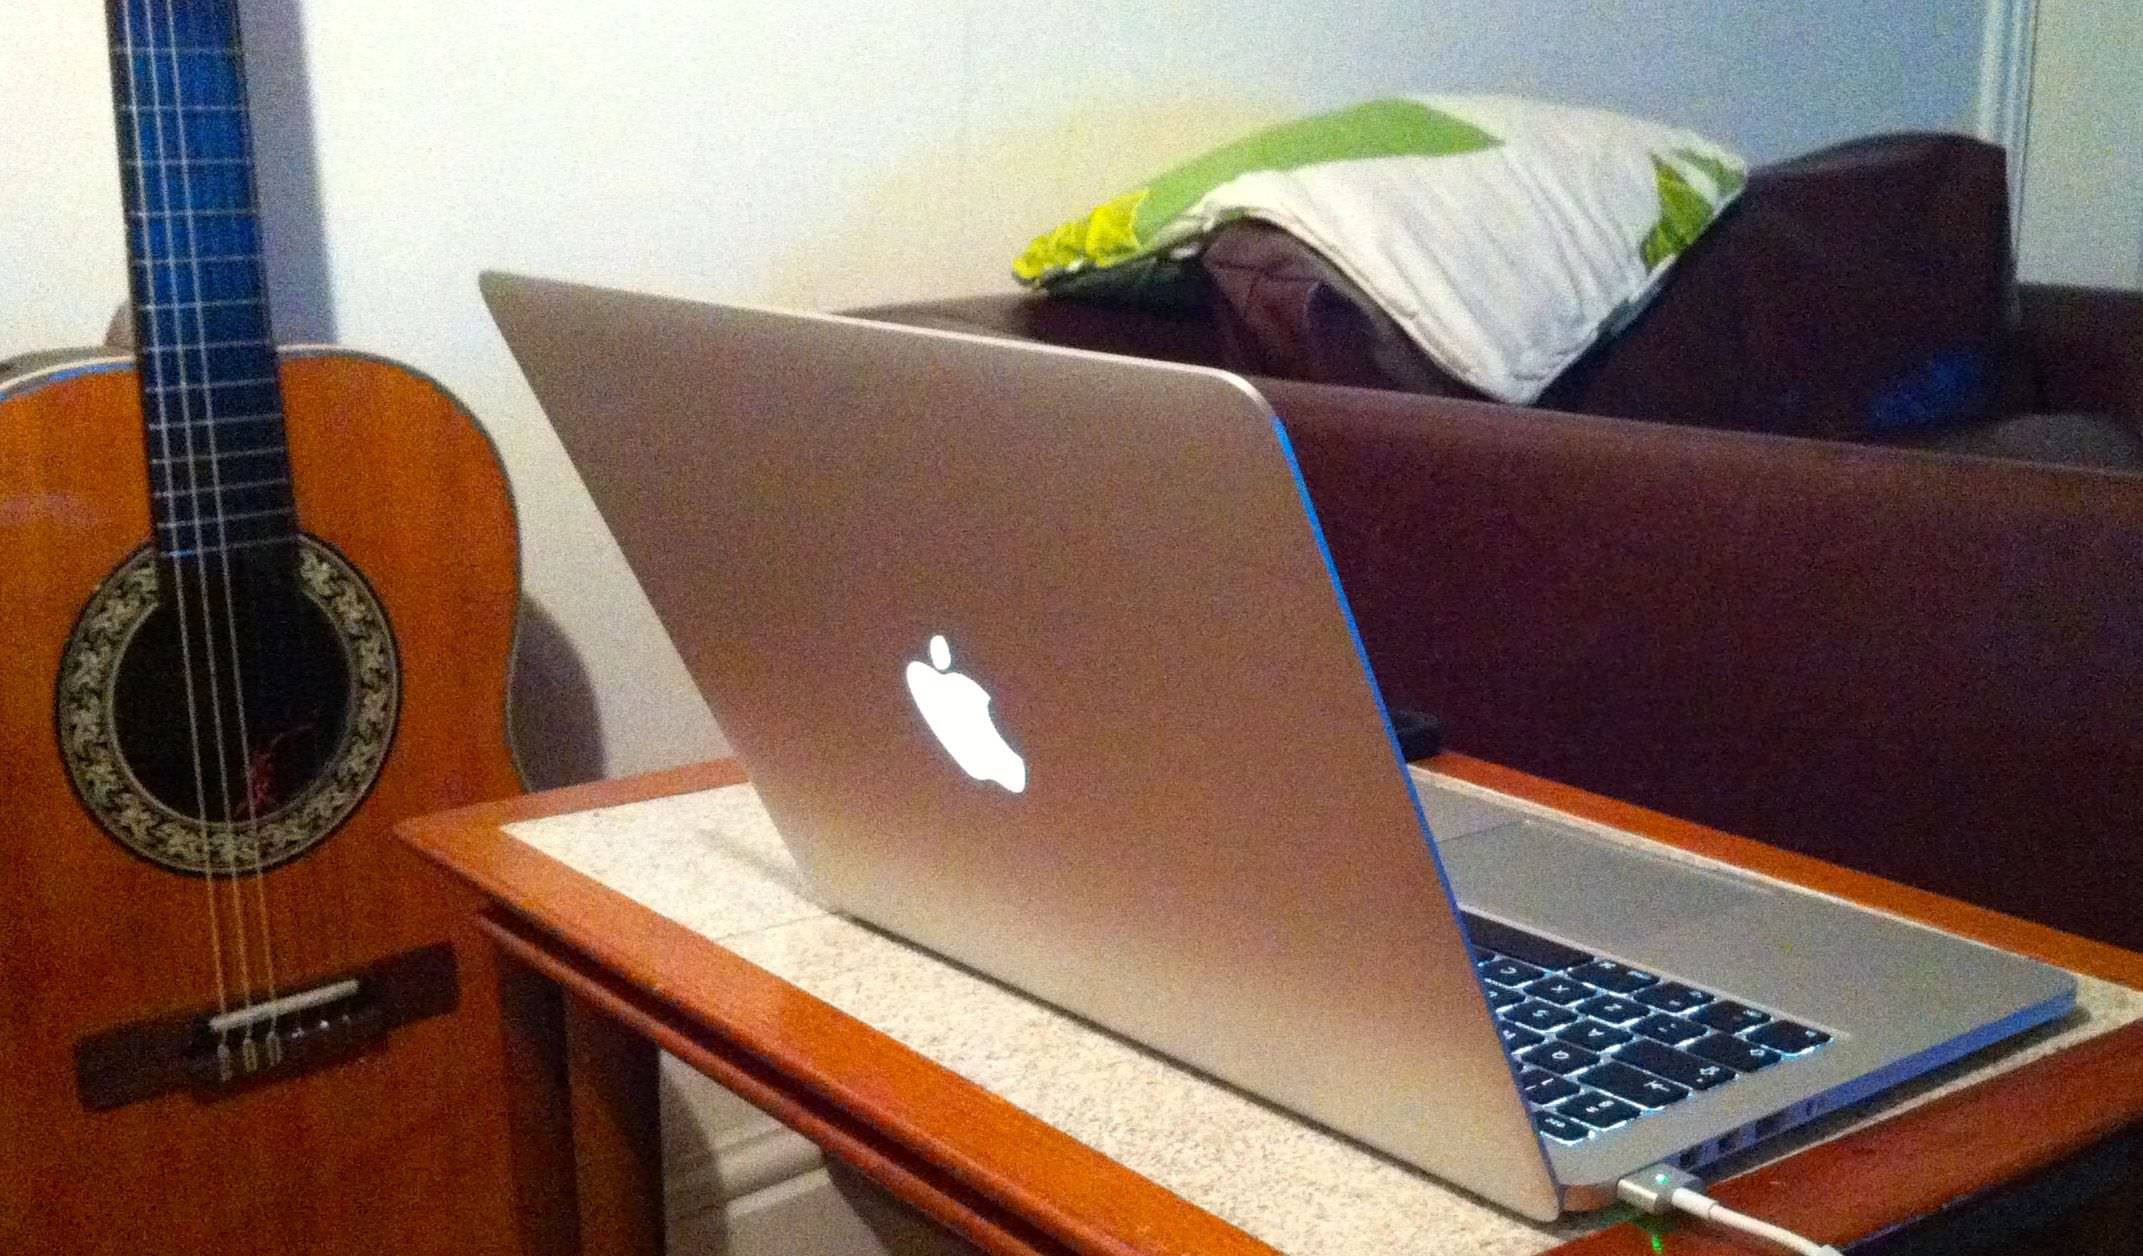 New MacBook Pro Laptop for Piranha Photography